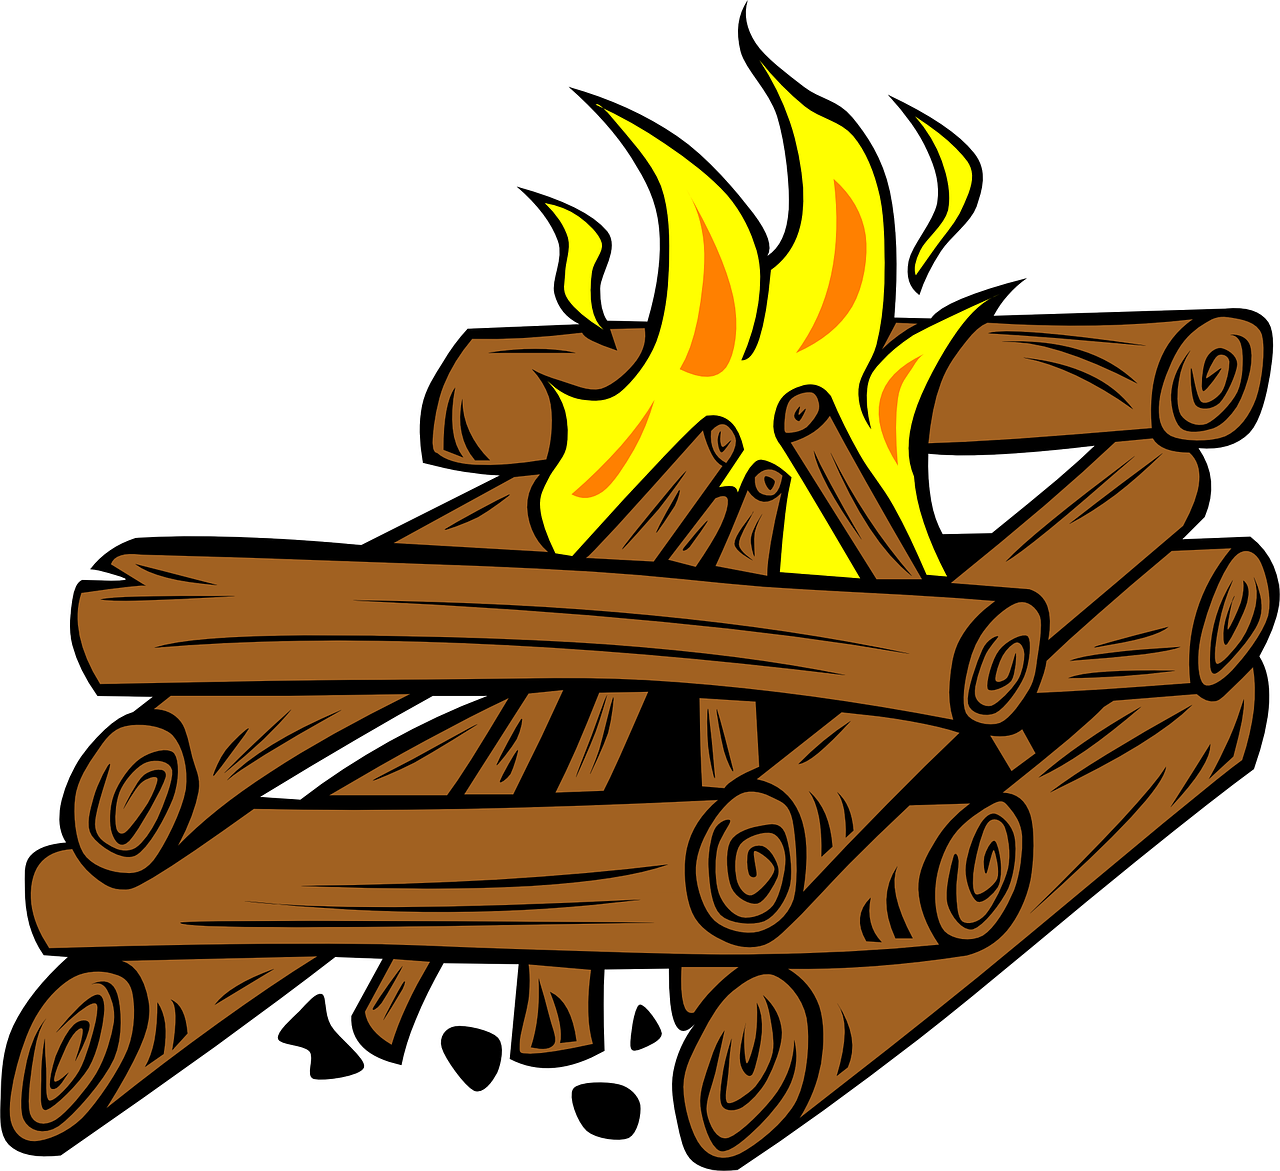 Firewood PNG descarga gratuita